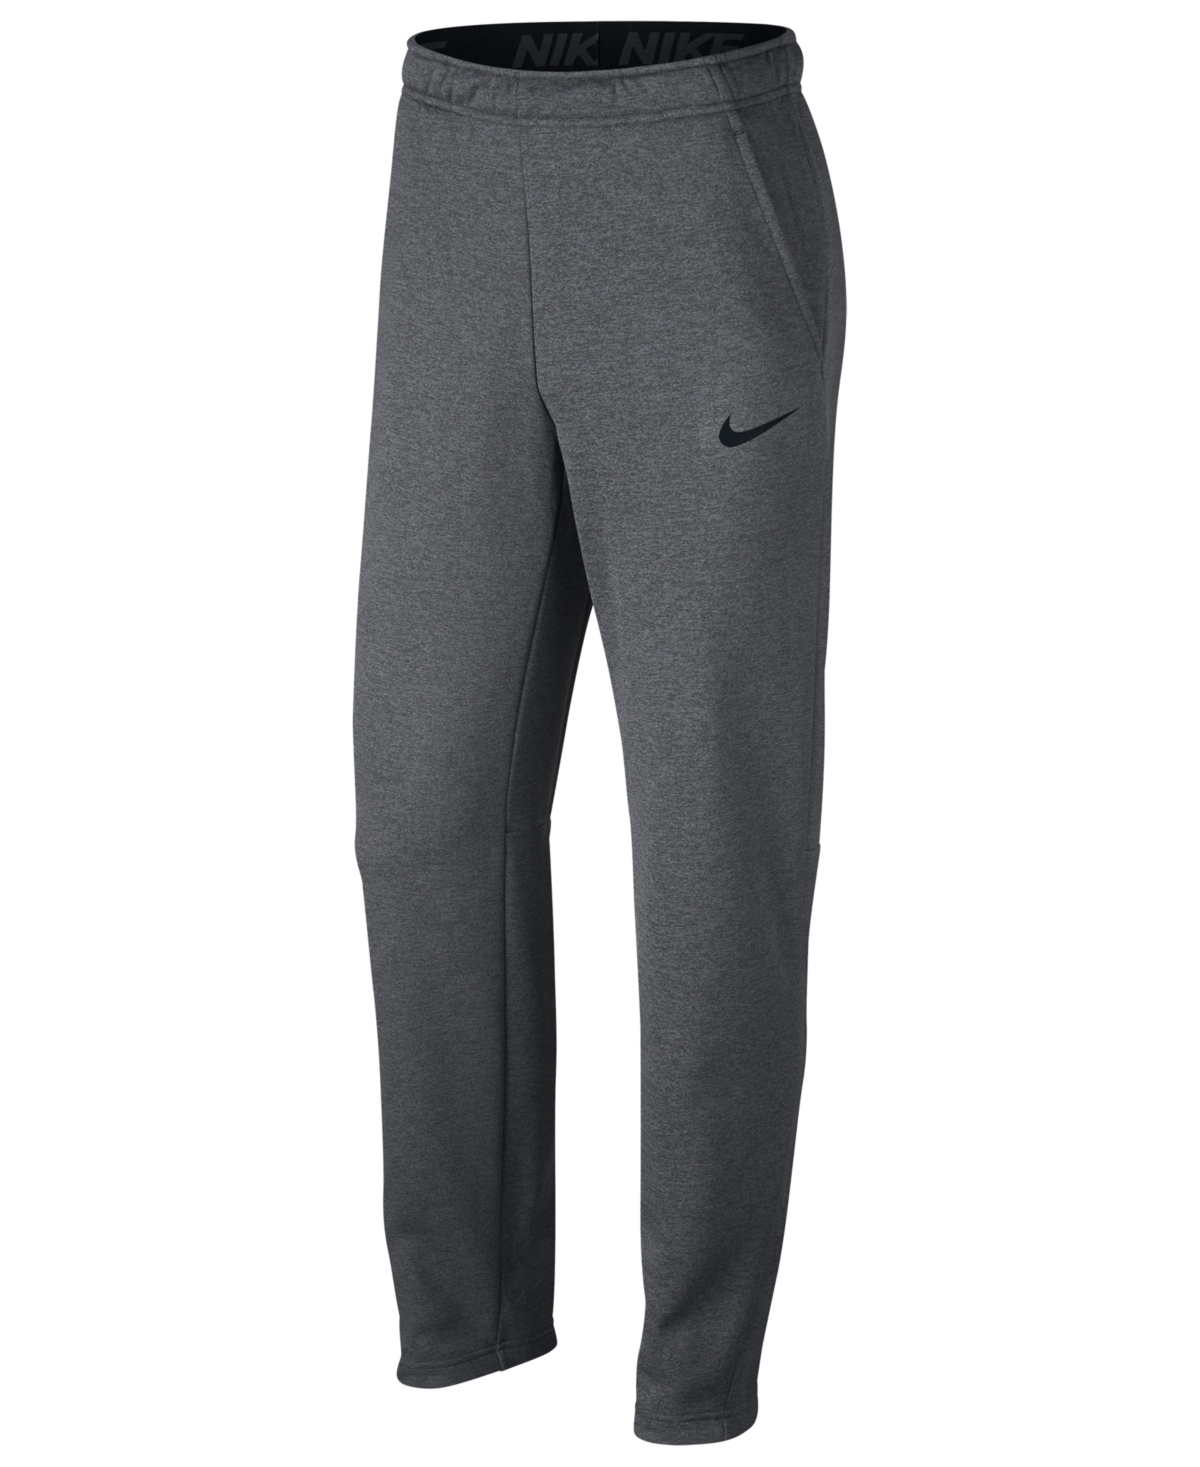 UPC 886668222110 product image for Nike Men's Therma Open Bottom Training Pants | upcitemdb.com